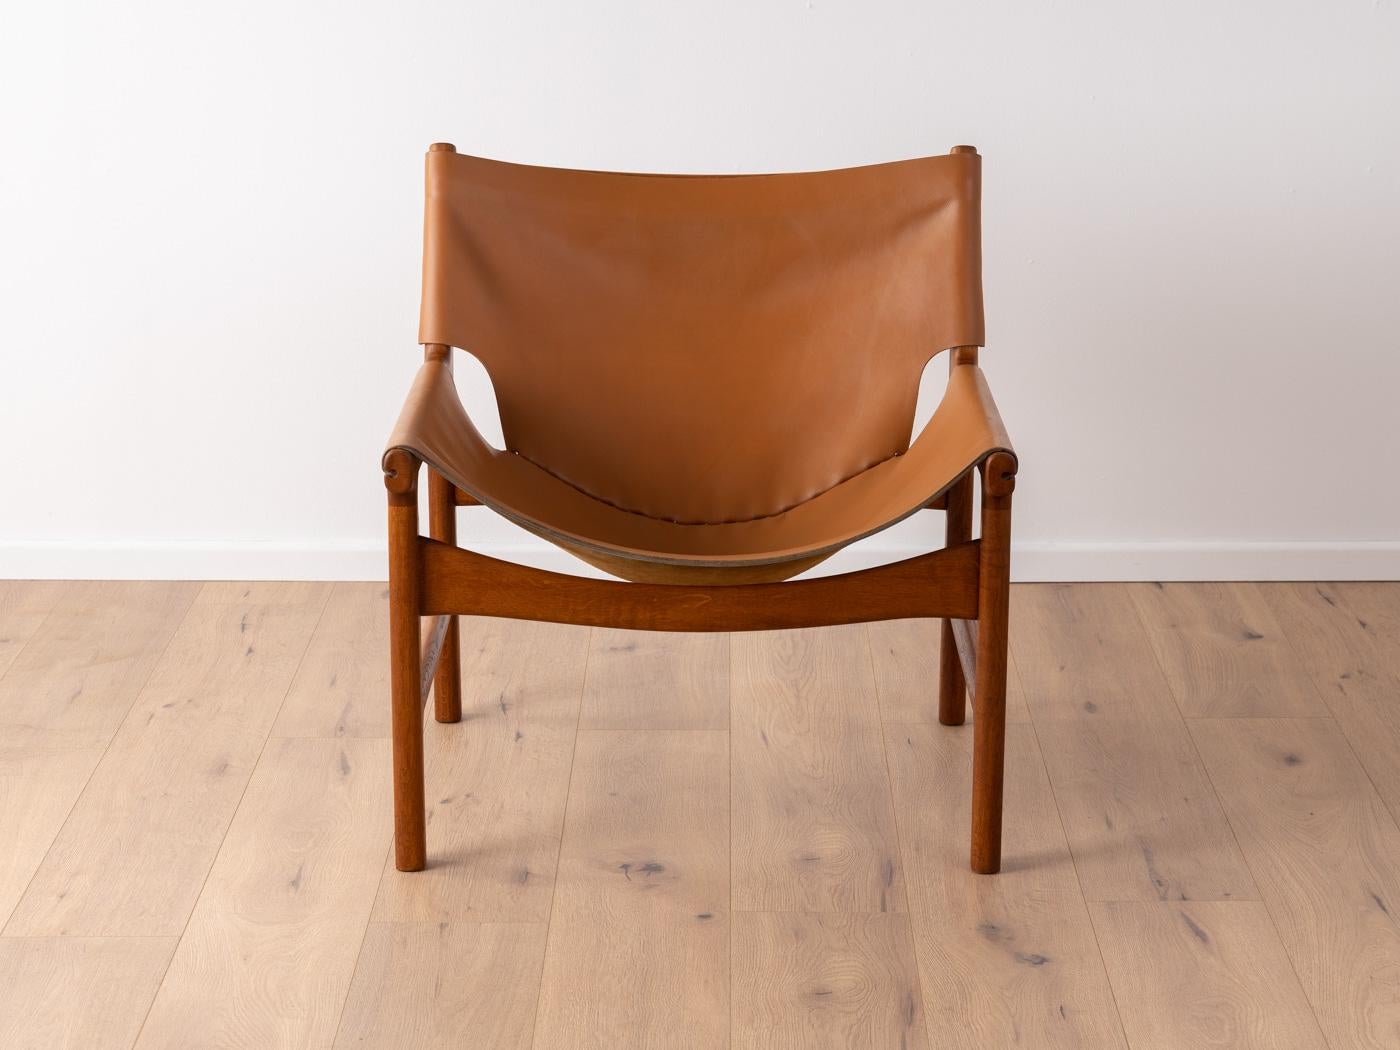 Mid-20th Century Model 103 Lounge Chair Designed by Illum Wikkelsø, Made in Denmark For Sale